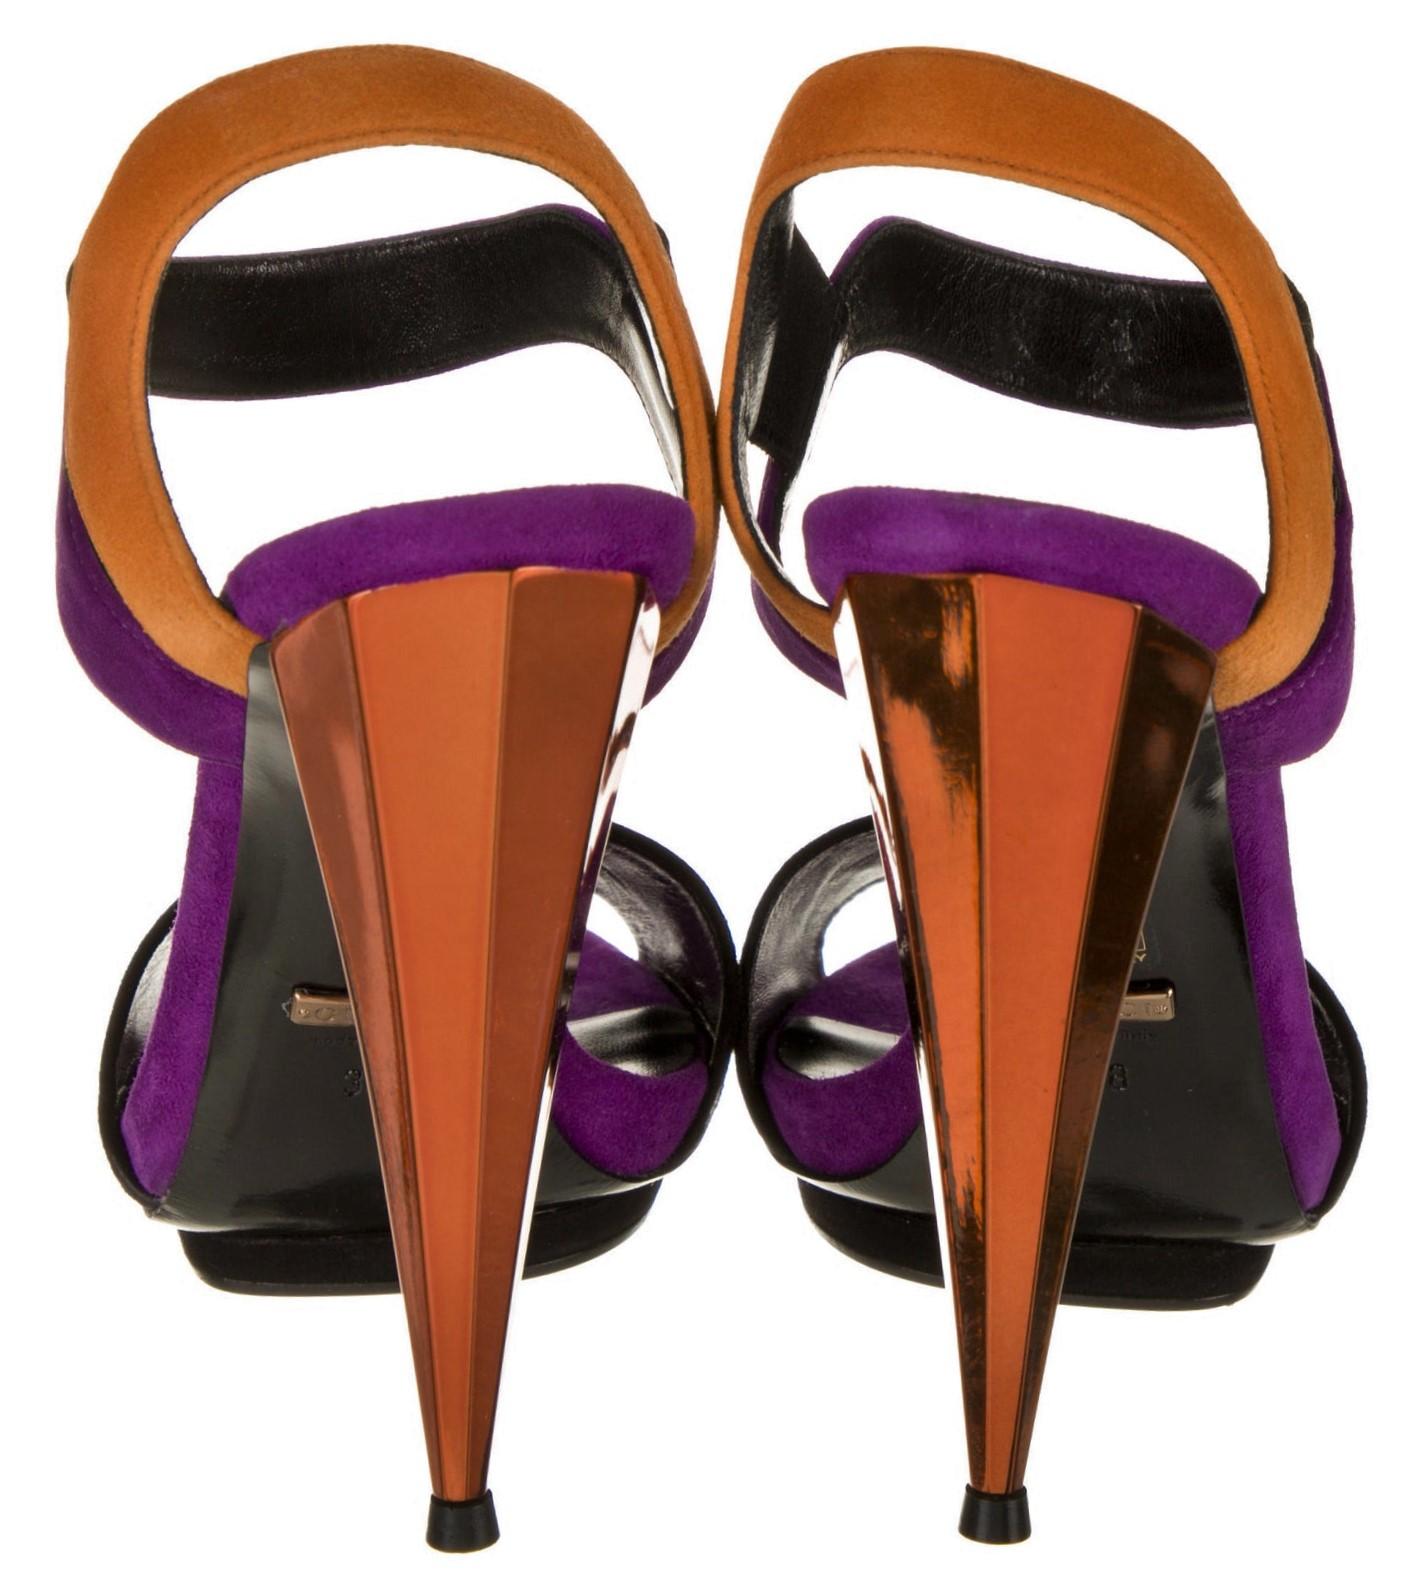 New Gucci Ad Runway 2014 Purple Orange Suede Mirrored Pump Heels Sz 39 In New Condition For Sale In Leesburg, VA